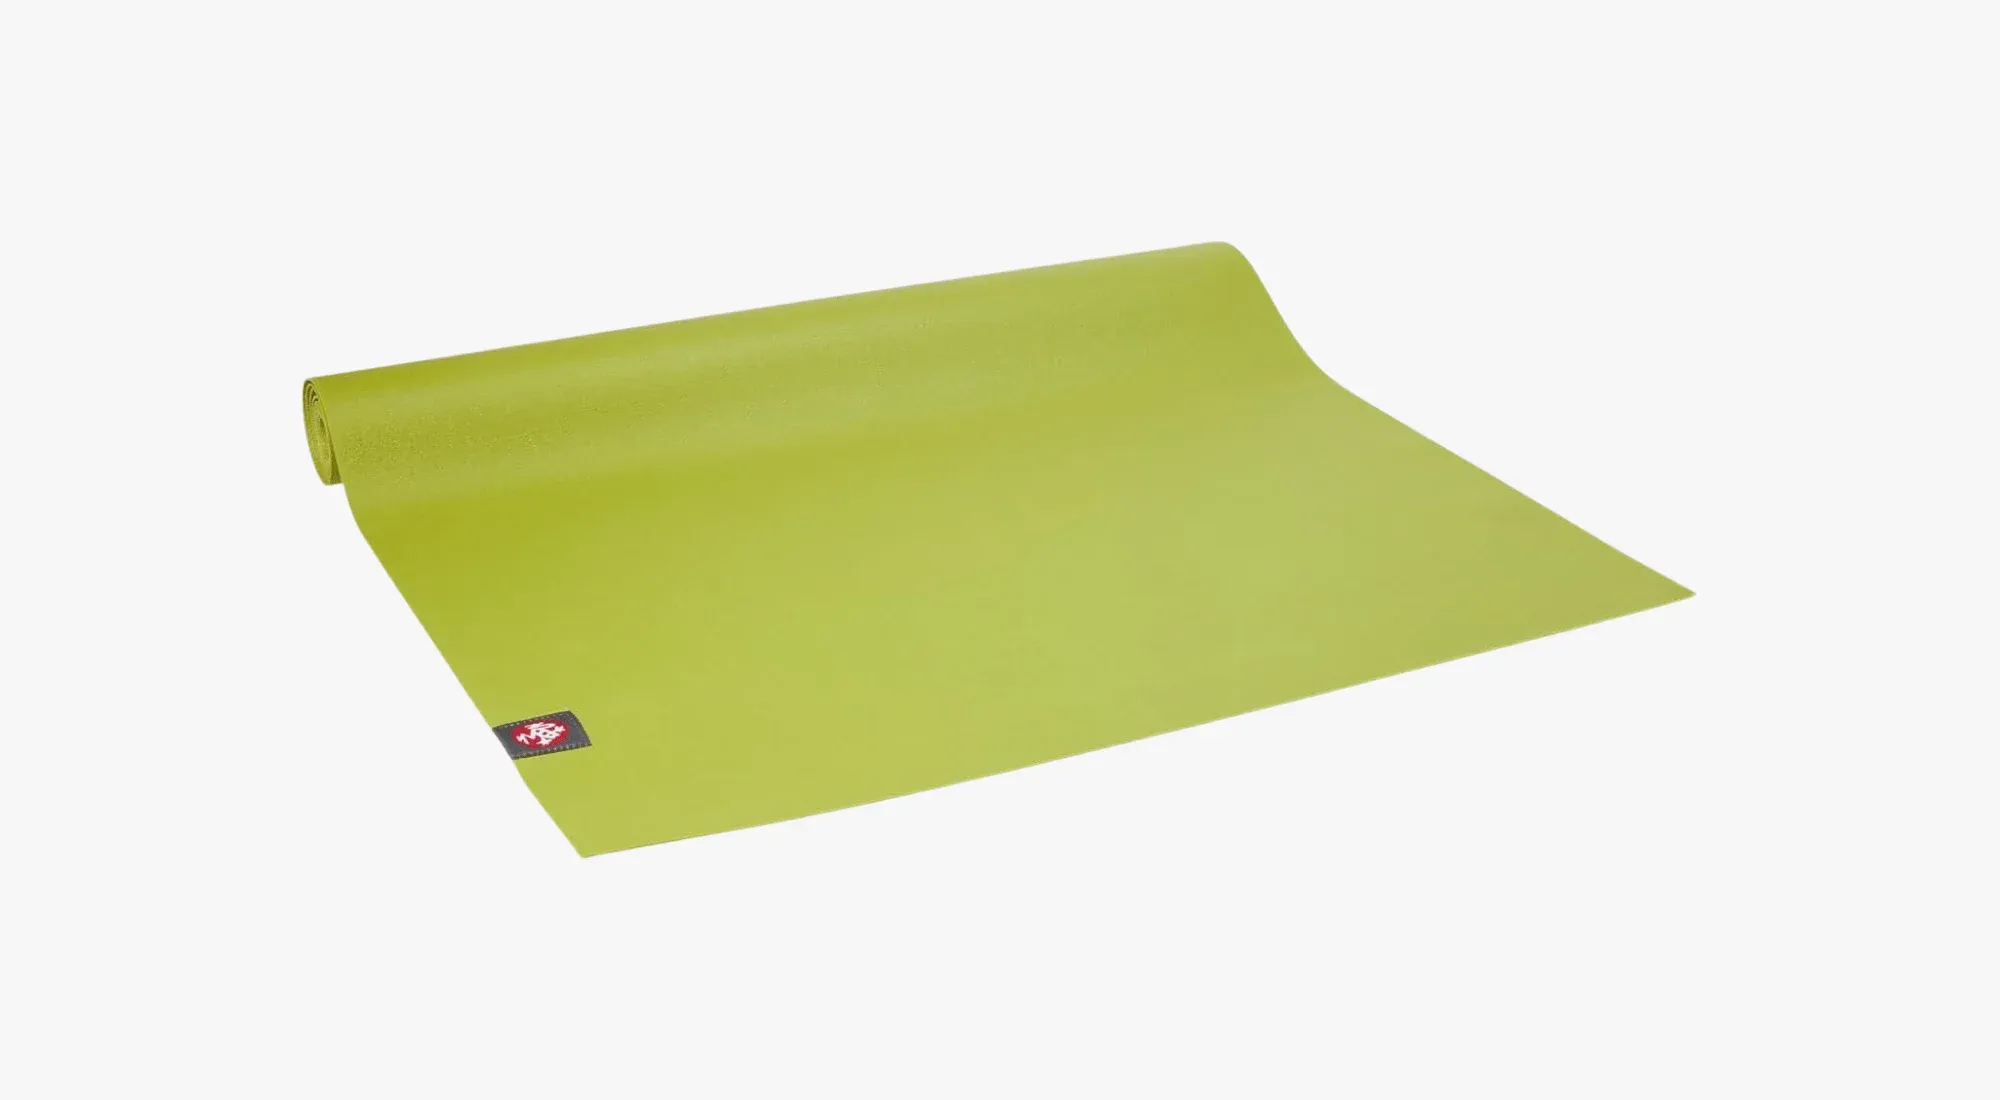 Kulae EASYmat Travel Yoga Mat (72 X 24) 2mm